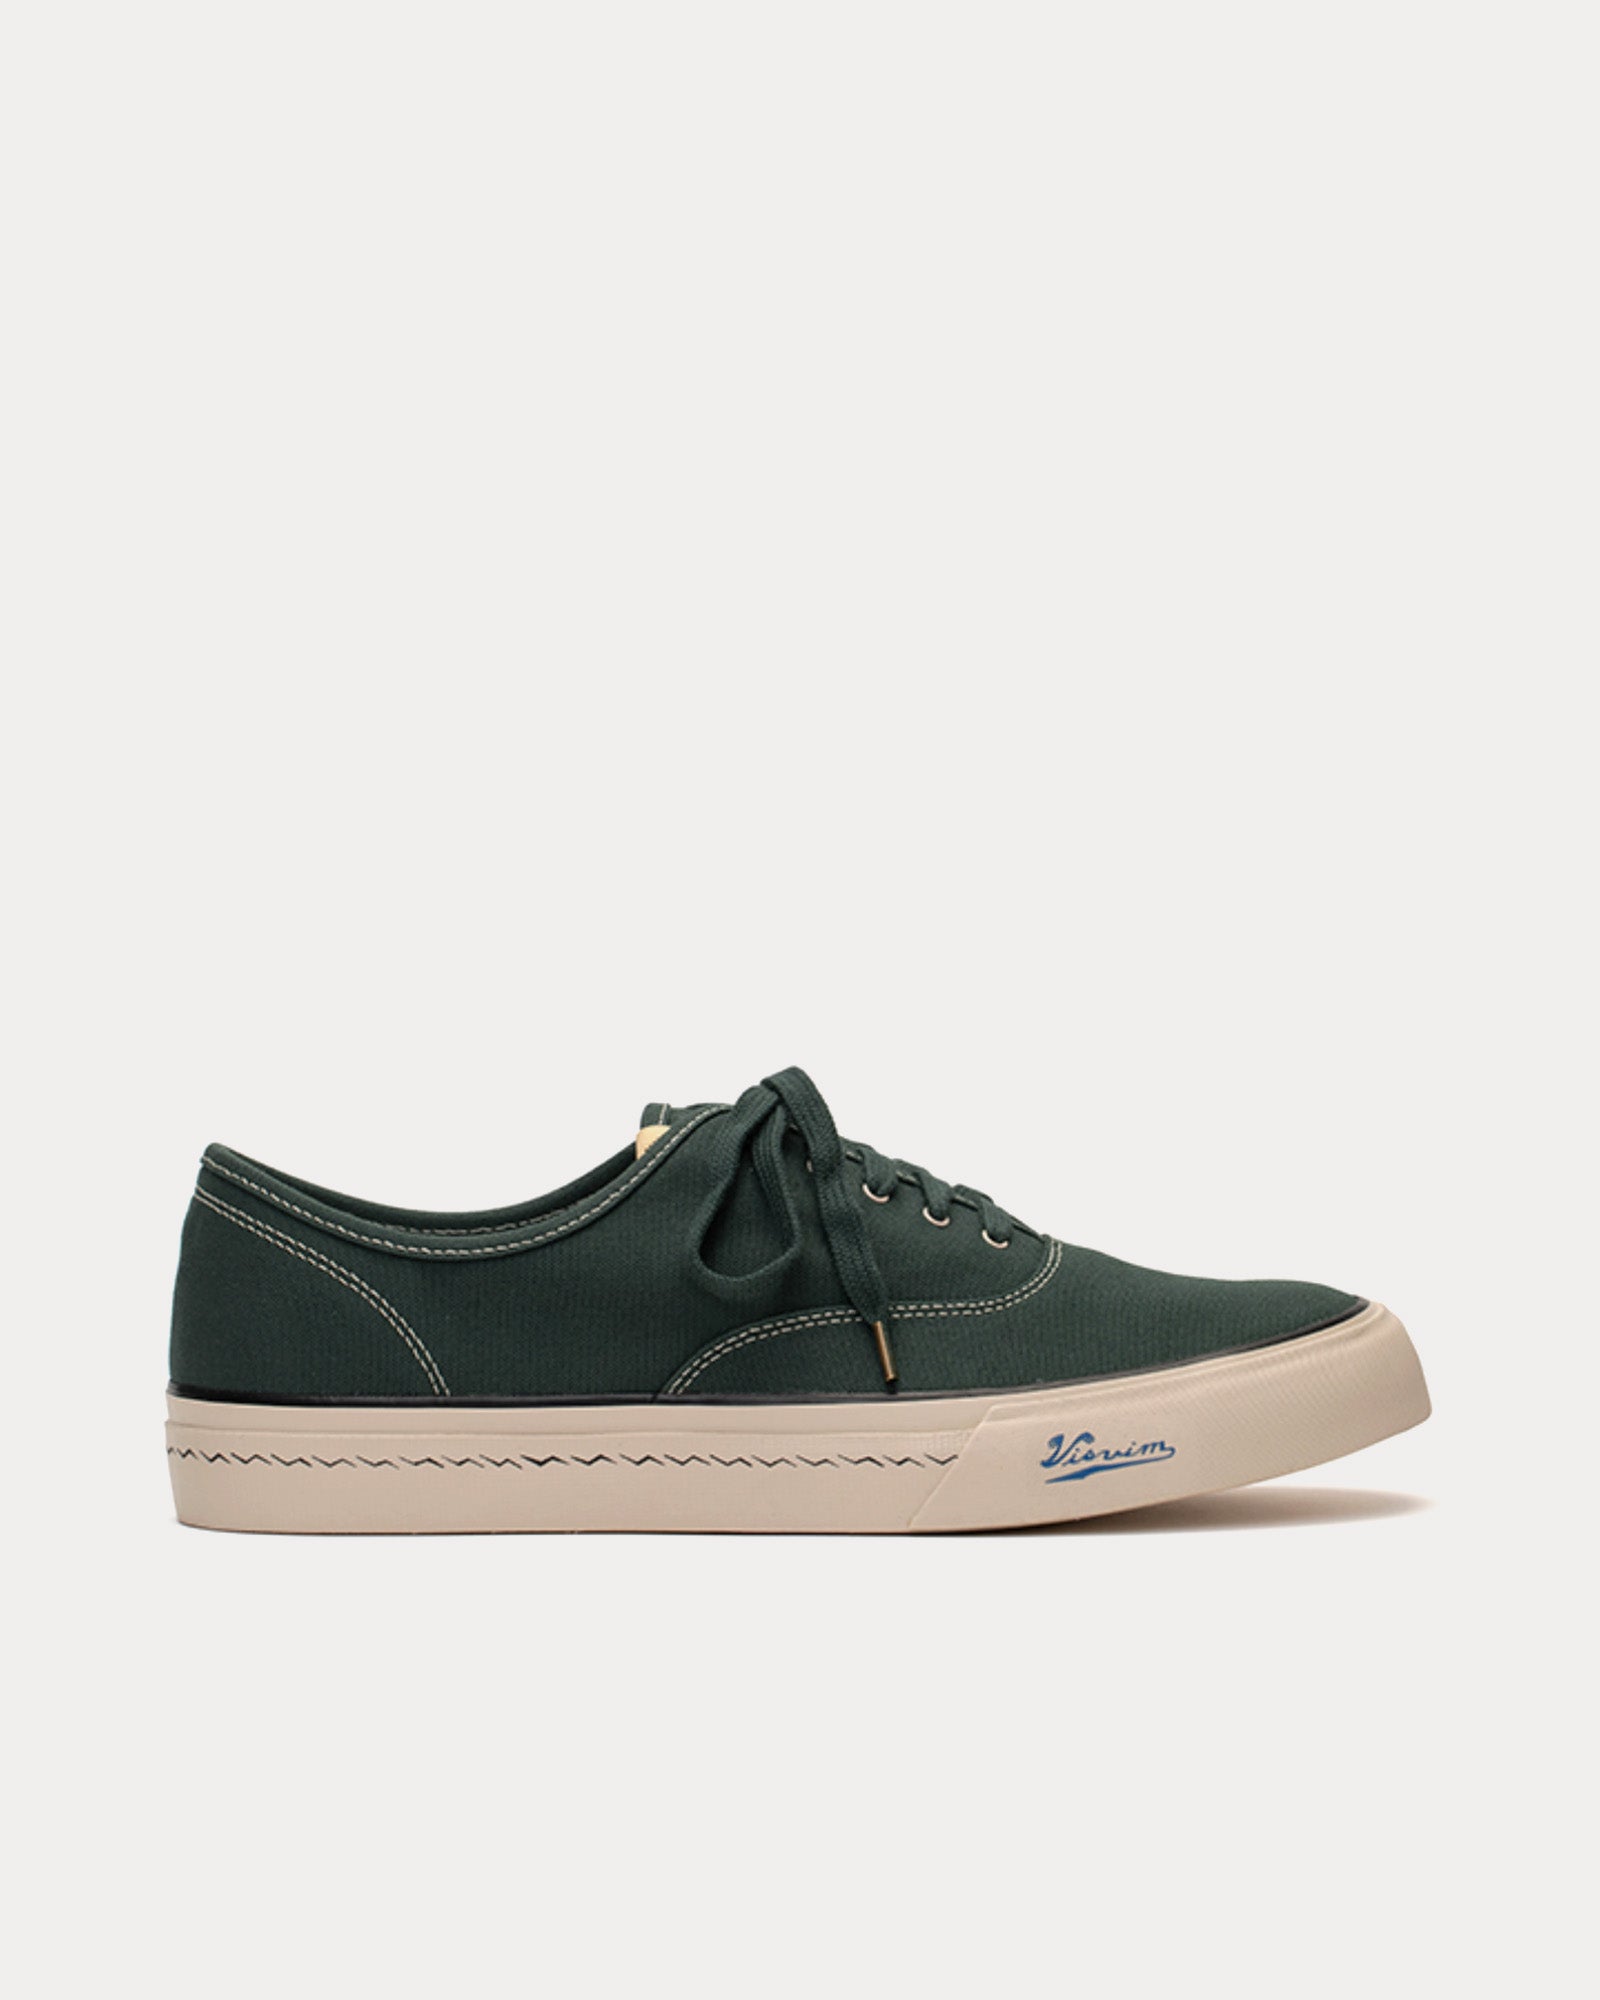 Visvim - Logan Deck Lo Sipe Green Low Top Sneakers